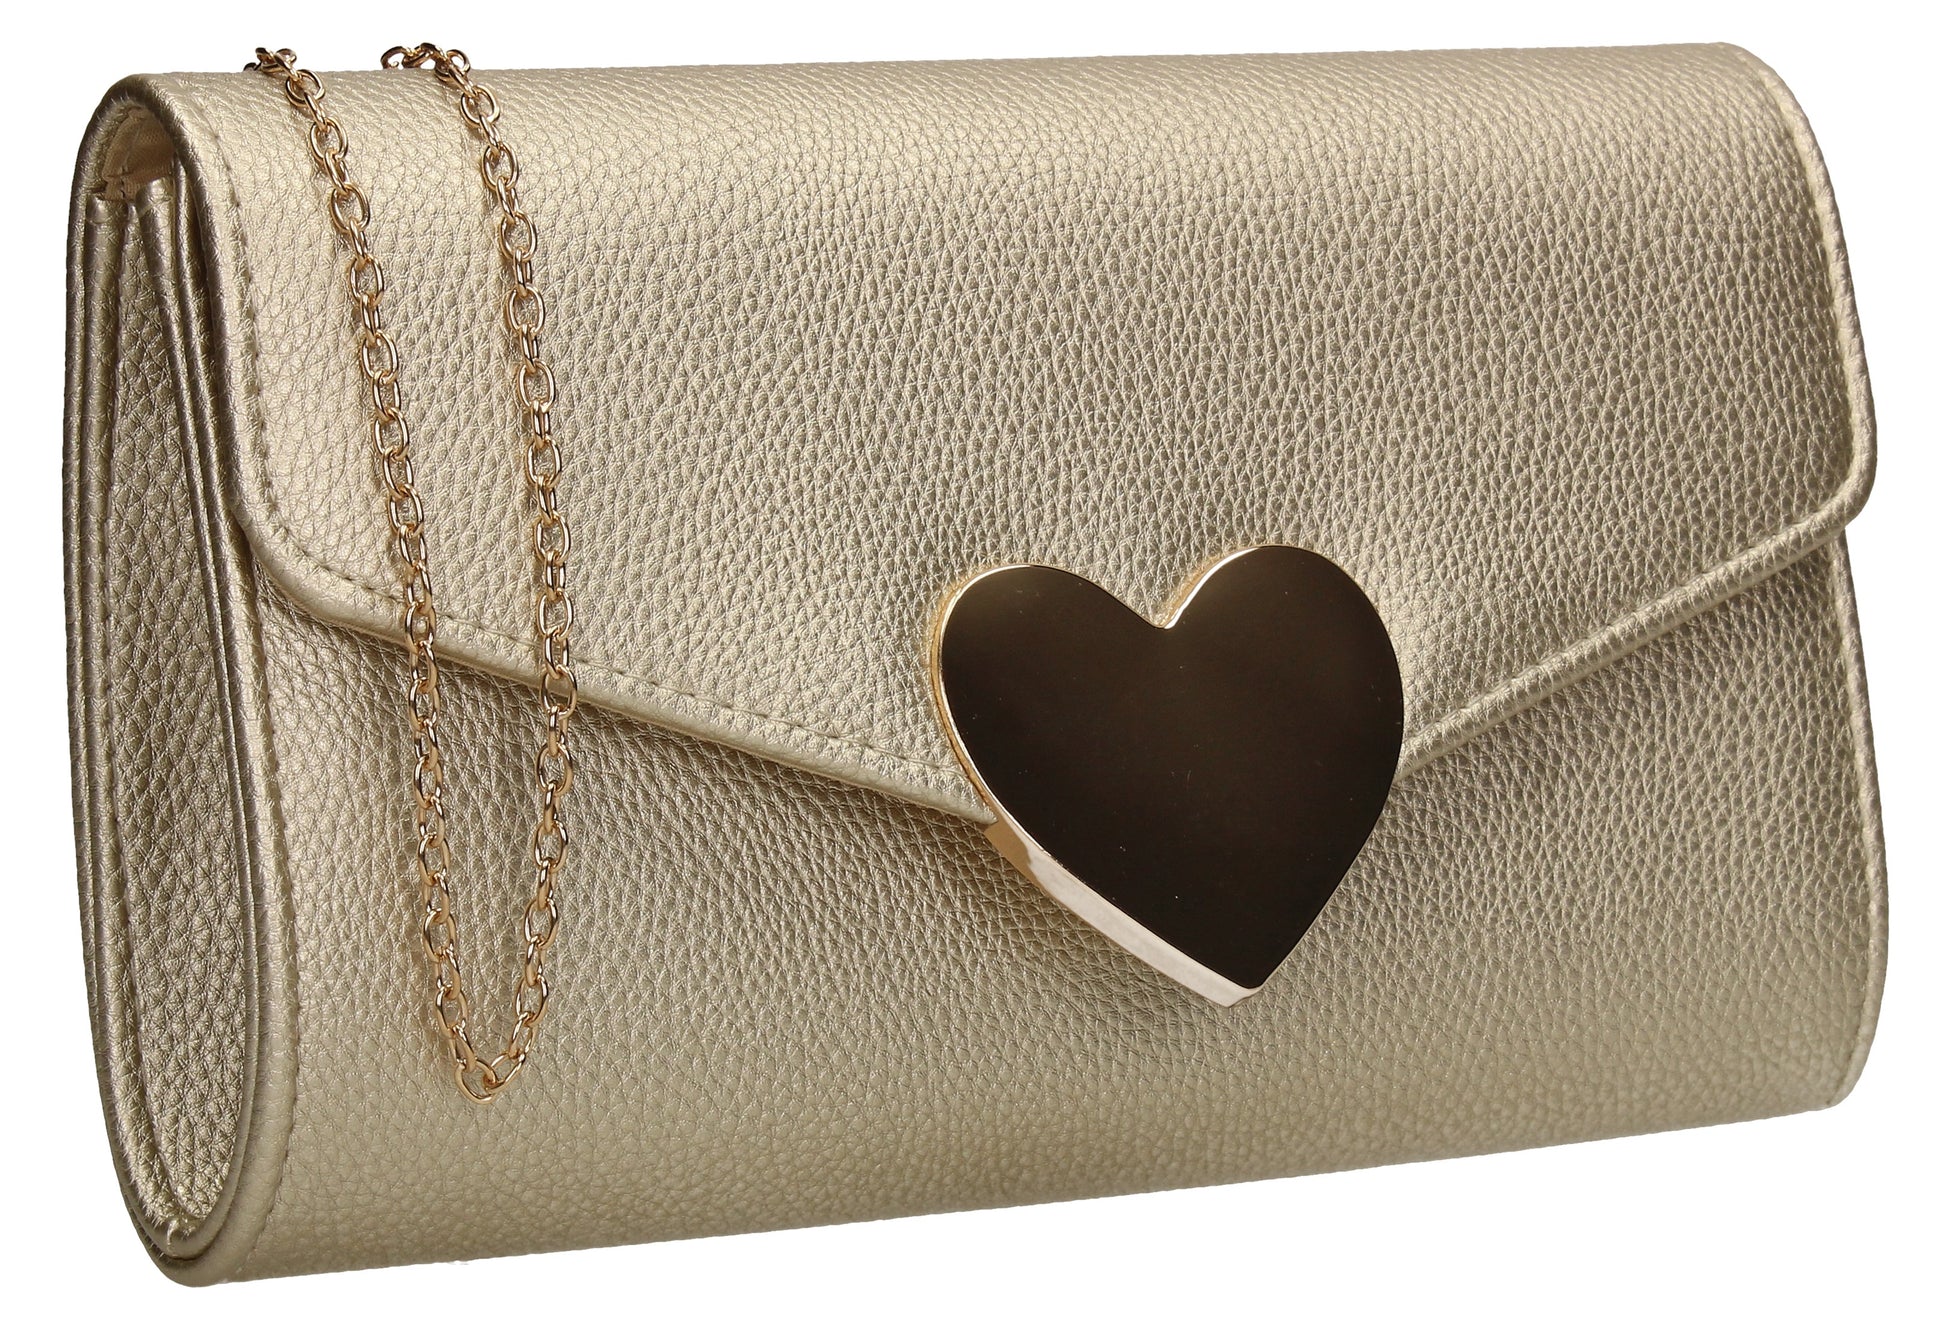 SWANKYSWANS Corrie Heart Clutch Bag Gold Cute Cheap Clutch Bag For Weddings School and Work